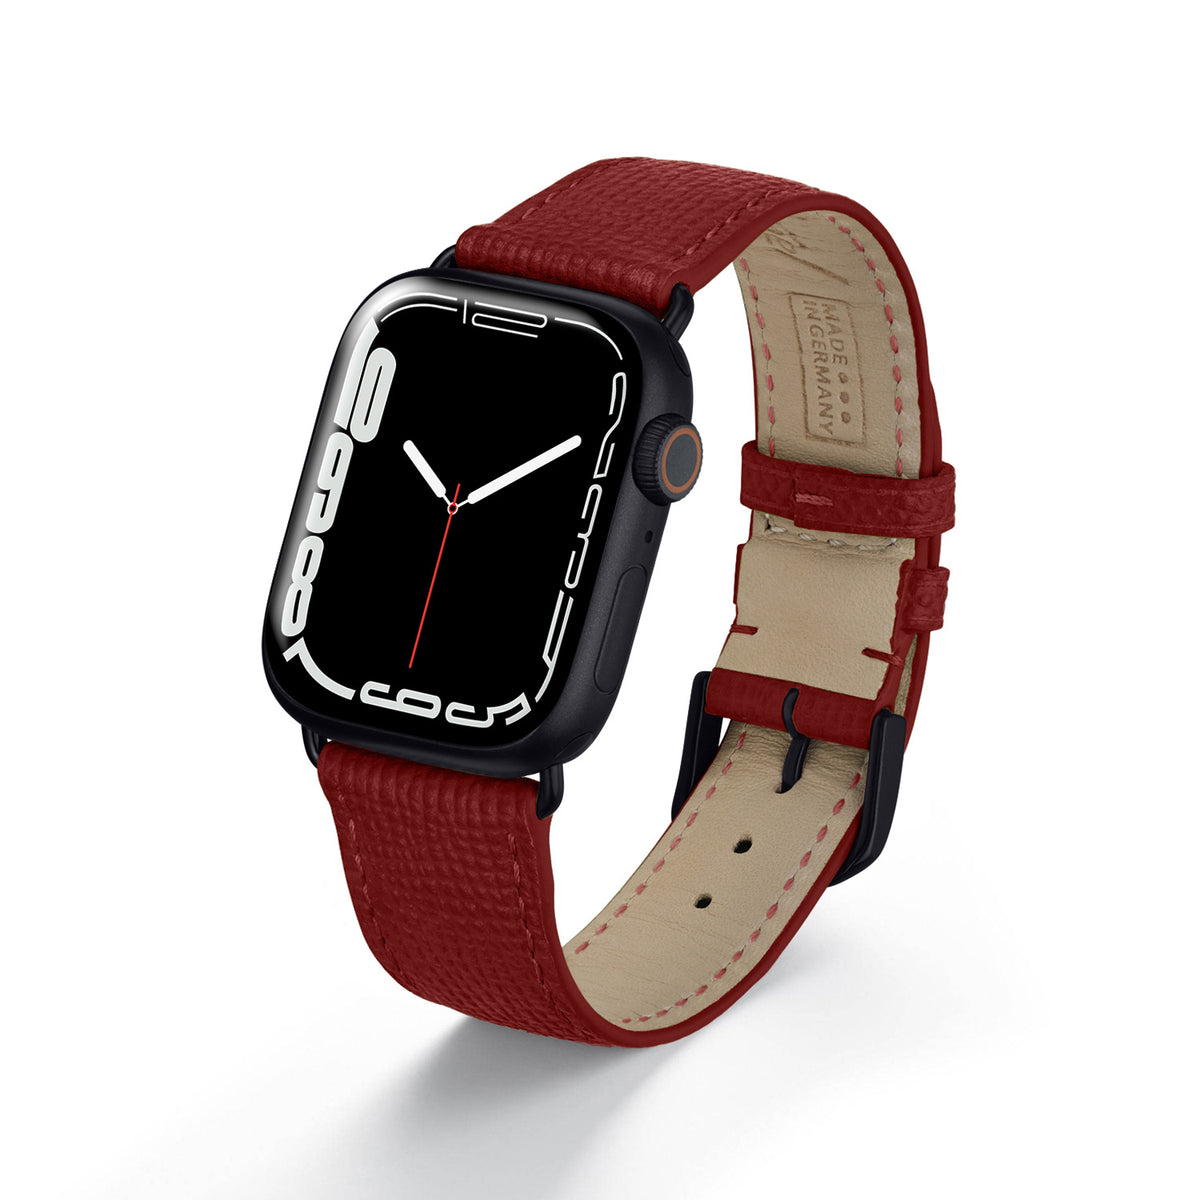 Apple Watch Uhrenarmband AvelloStrap von Happel, Rindsleder, handgefertigt, Bordeaux